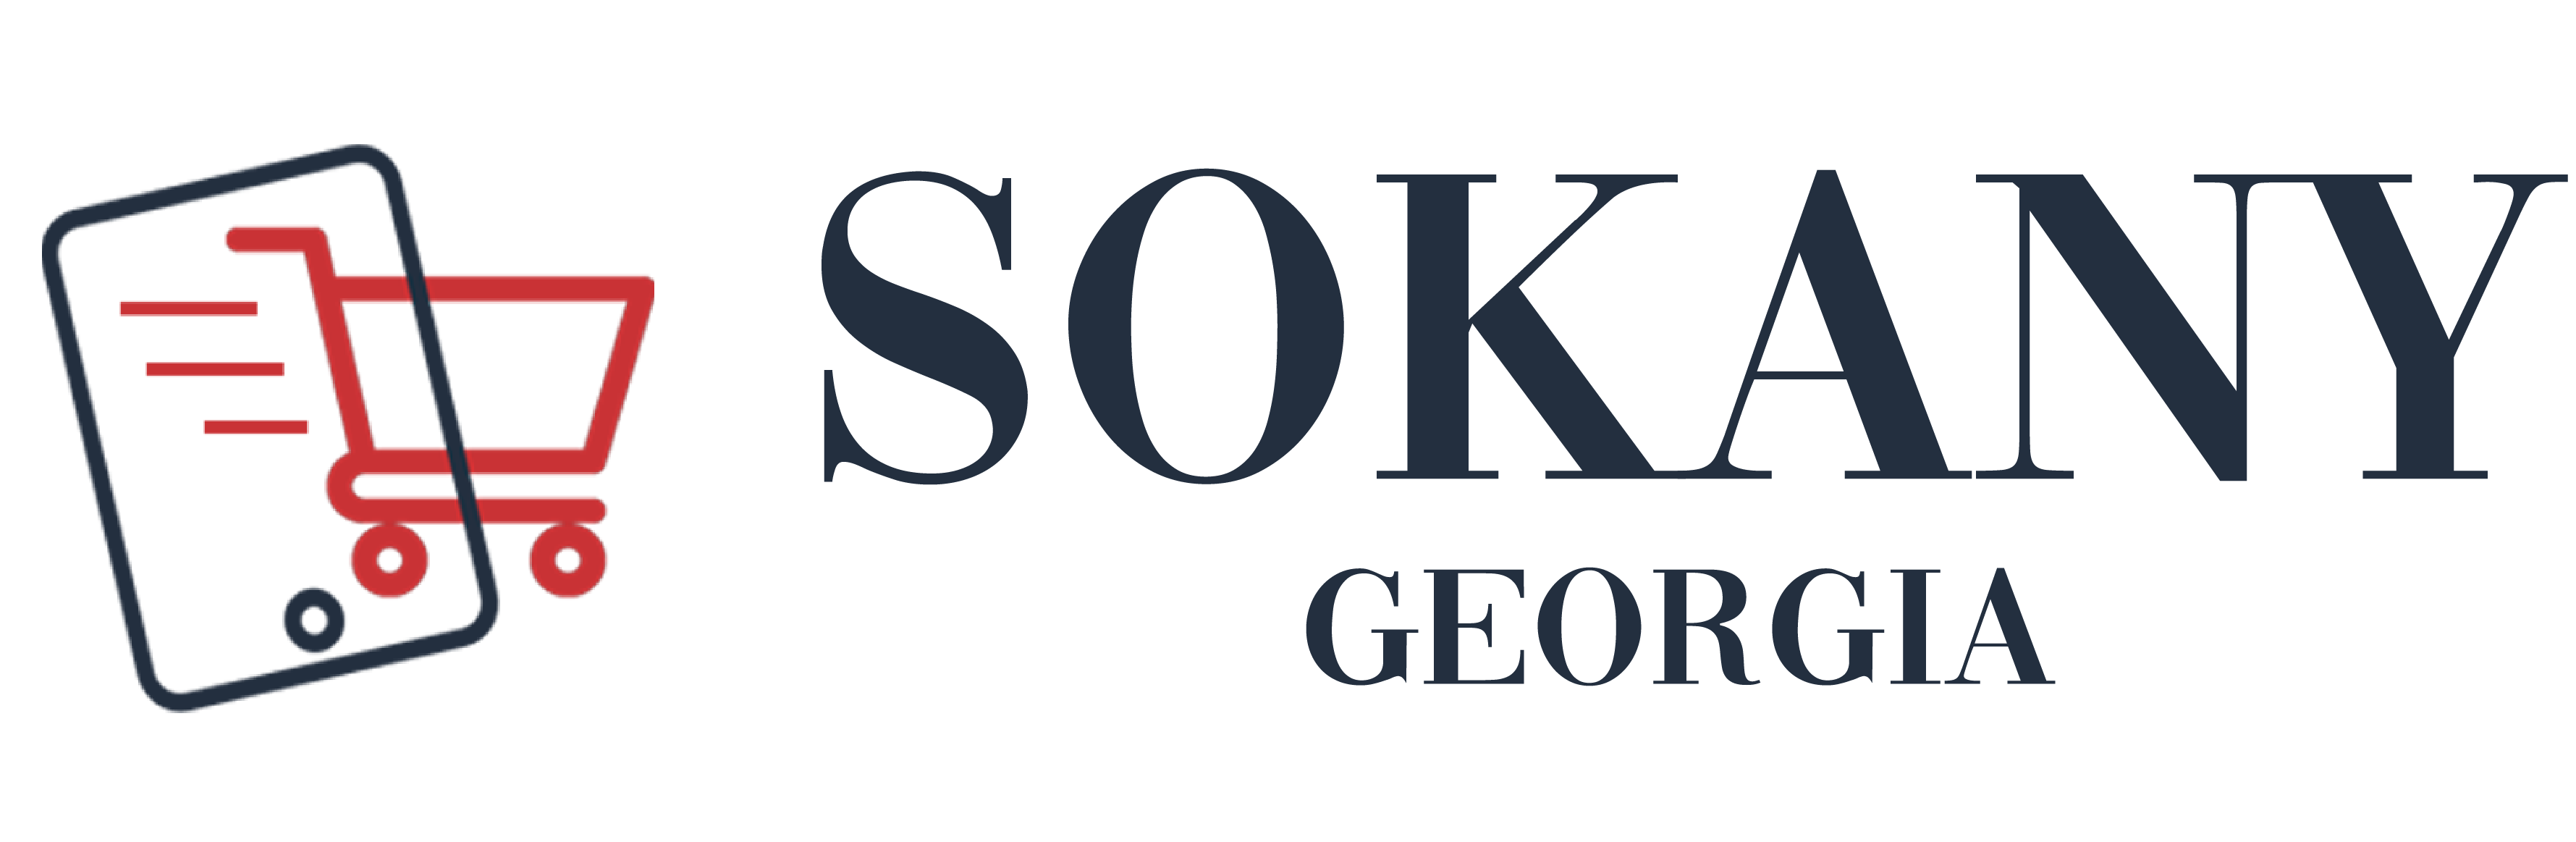 Sokany Georgia • სოკანი საქართველო